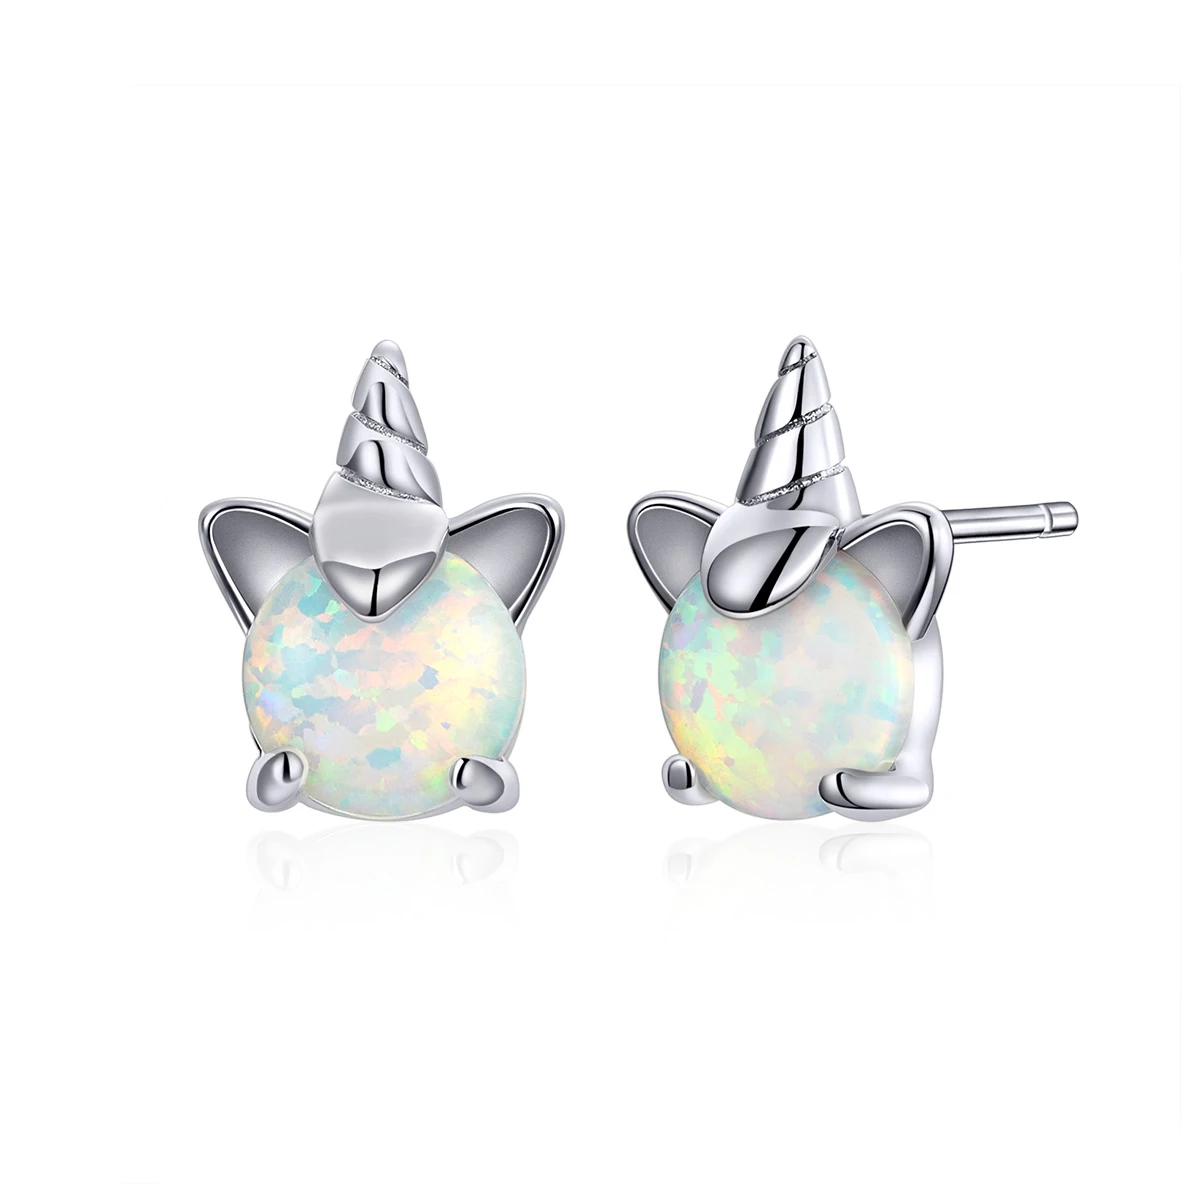 925 Sterling Silver Opal Animal Studs Earrings for Sensitive Ears Jewelry Gifts for Women Girls 